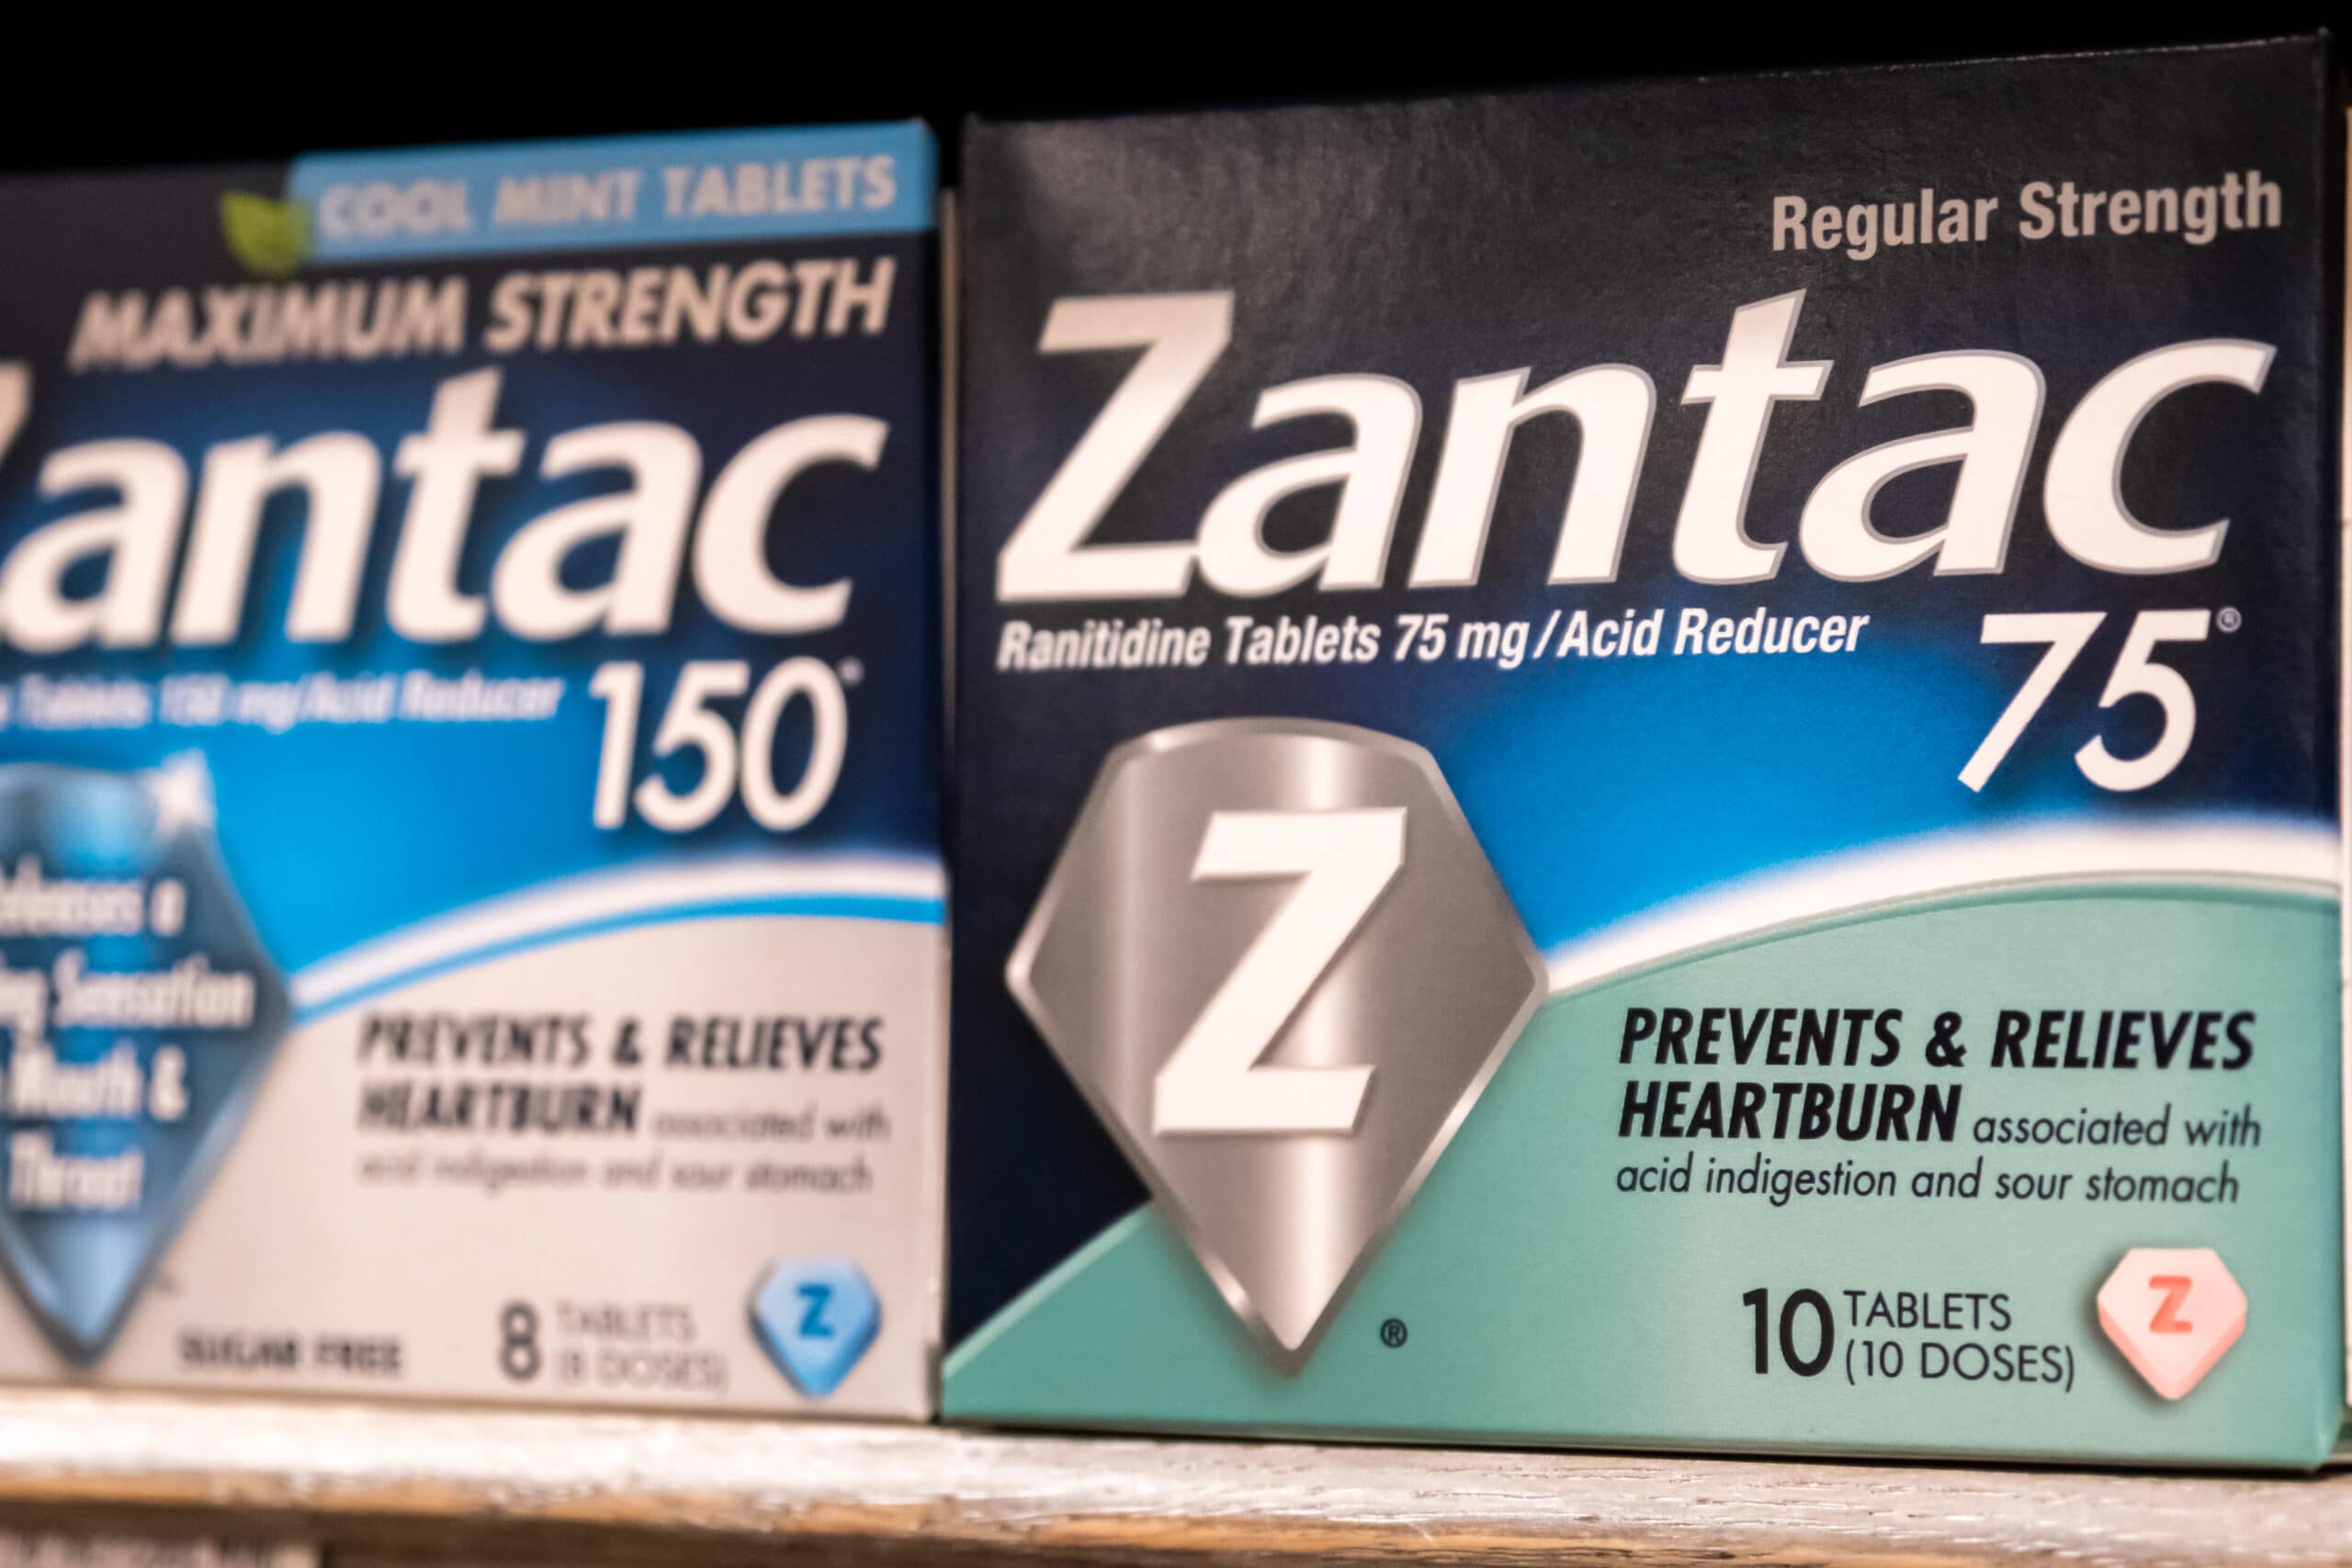 Zantac and Ranitidine Medicines Lawsuit Information